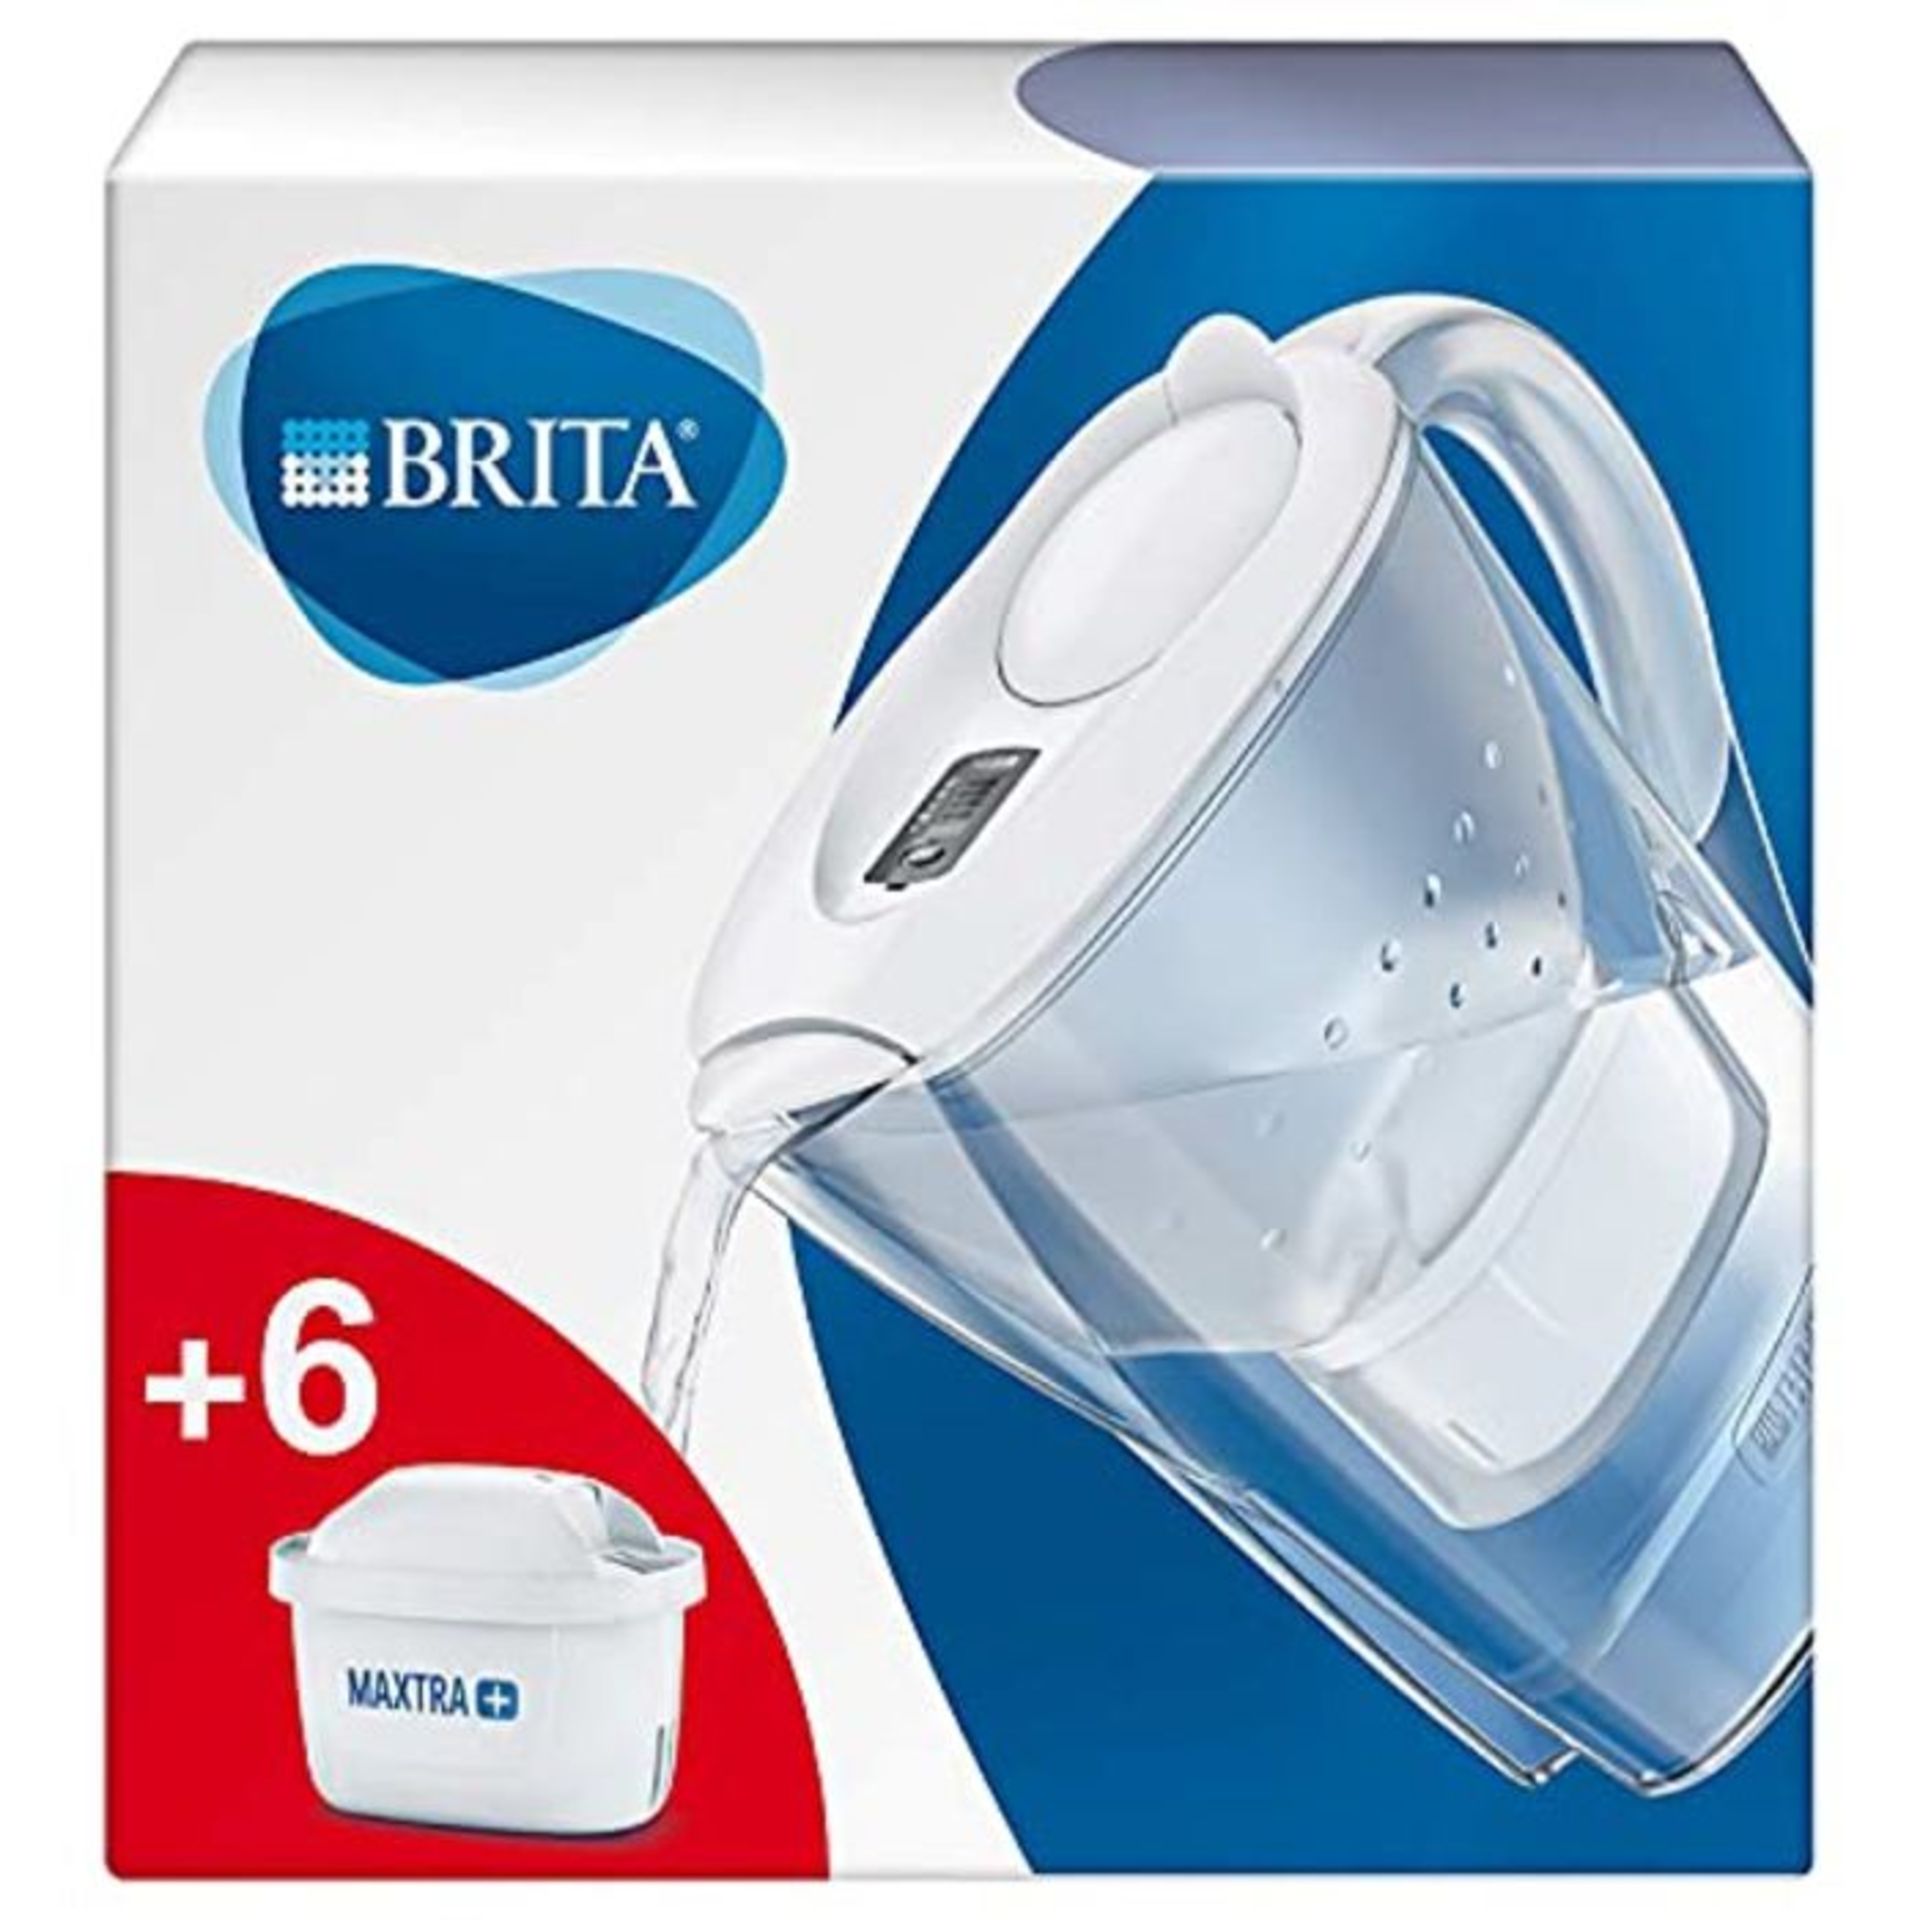 BRITA Marella Fridge water filter jug for reduction of chlorine, limescale and impuiti